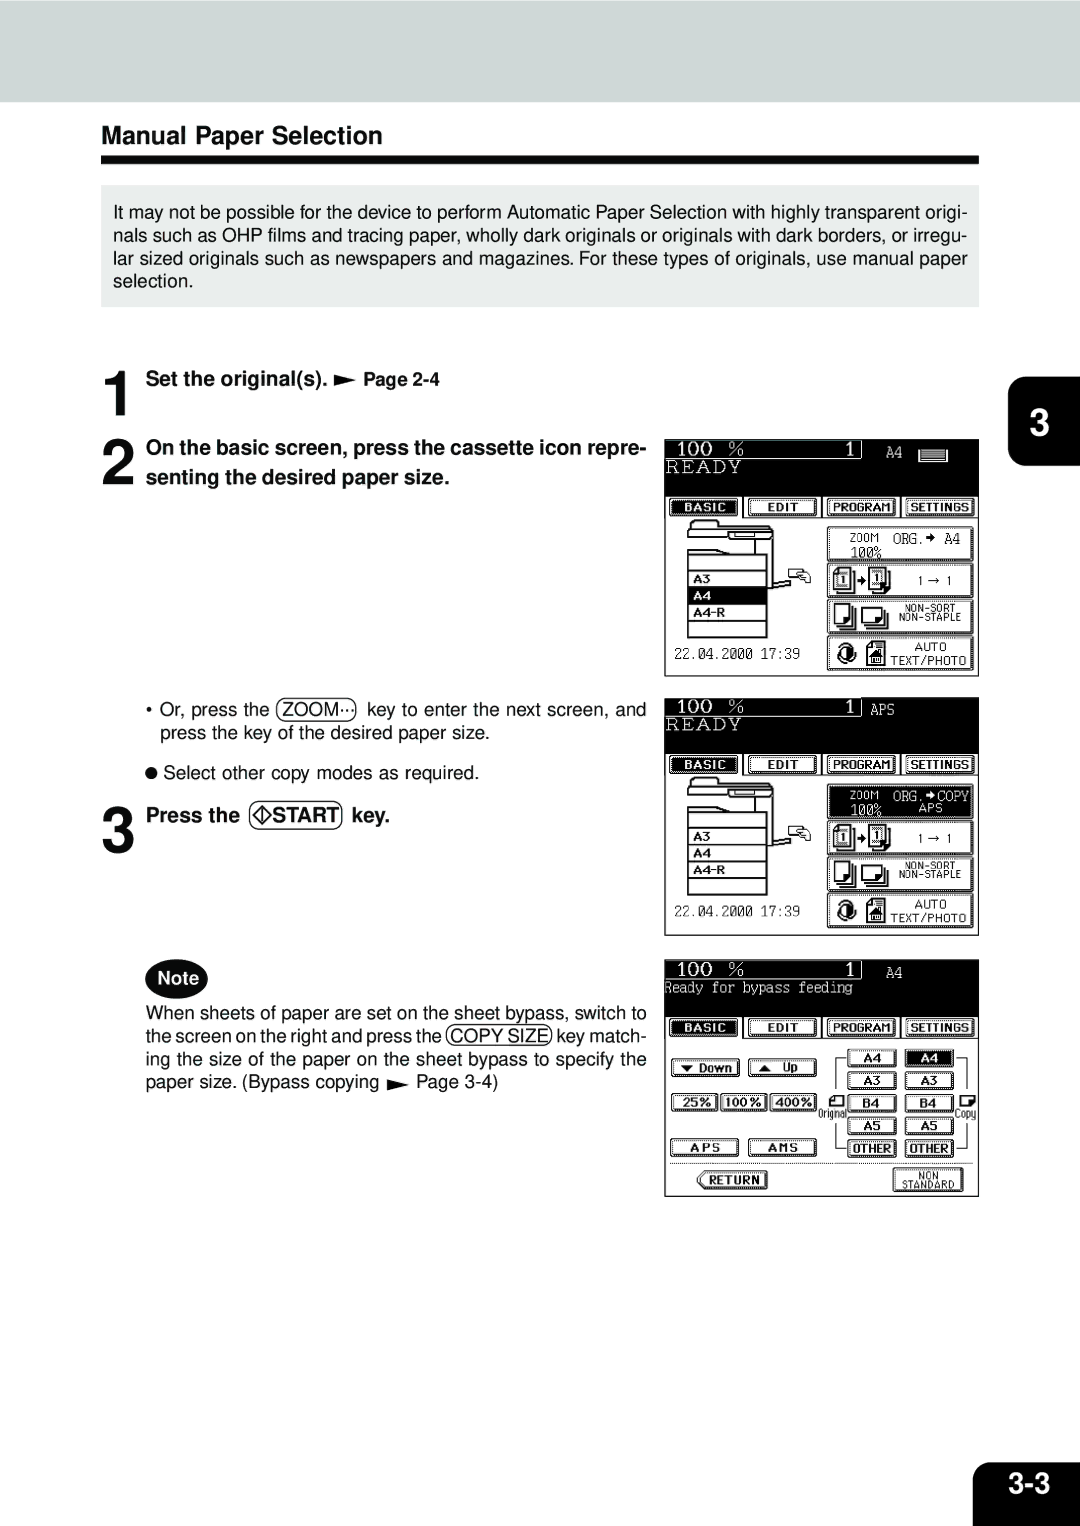 Toshiba e-STUDIO45, e-STUDIO35 manual Manual Paper Selection 